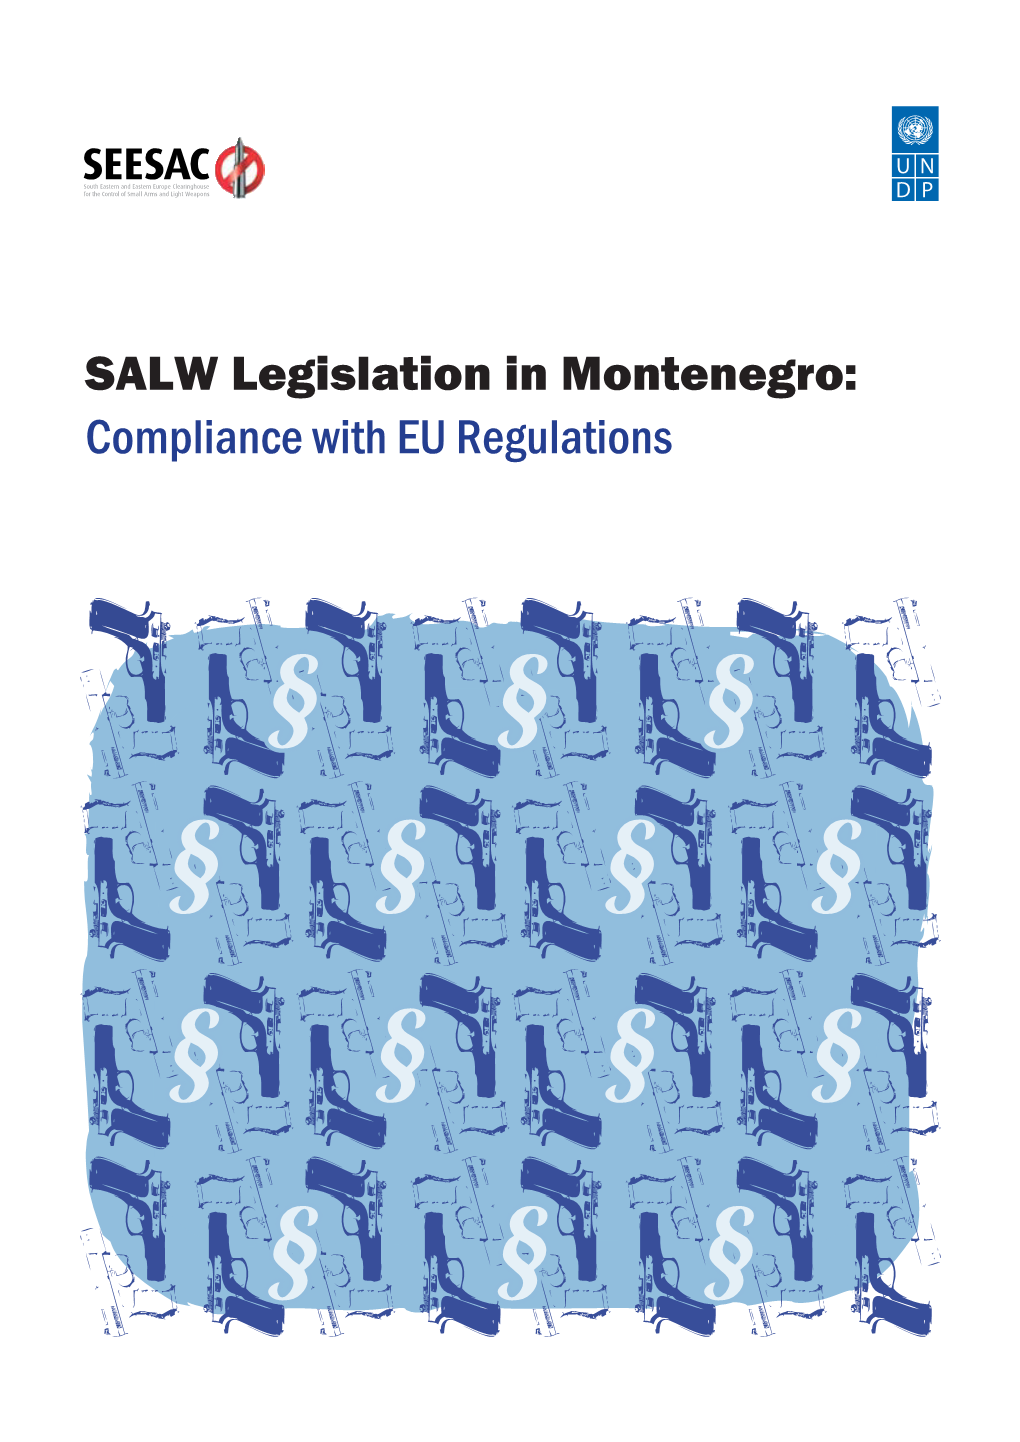 SALW Legislation in Montenegro: Compliance with EU Regulations